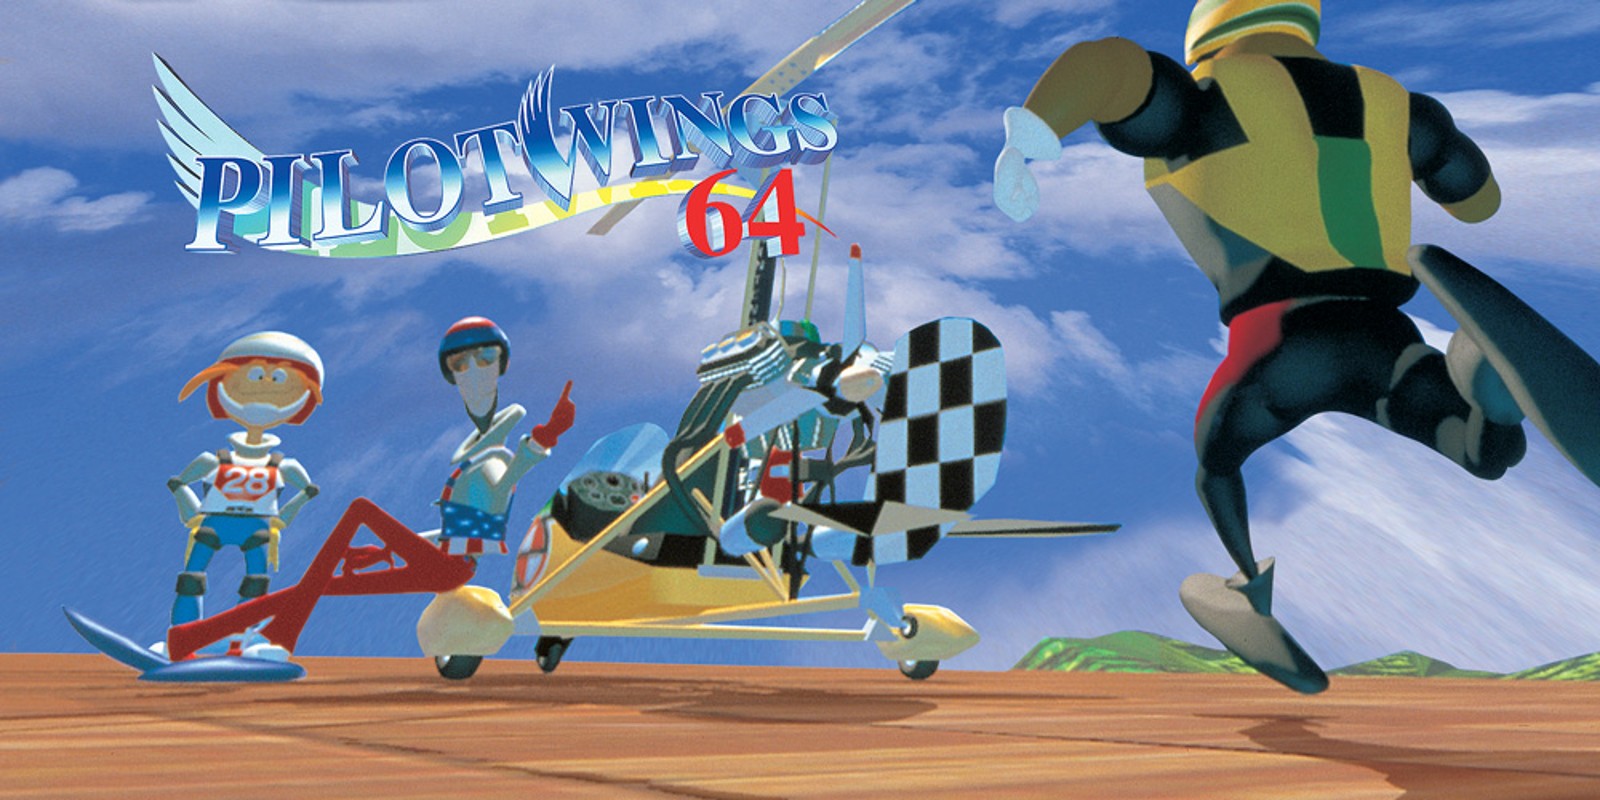 Pilotwings64 llega a Nintendo Switch